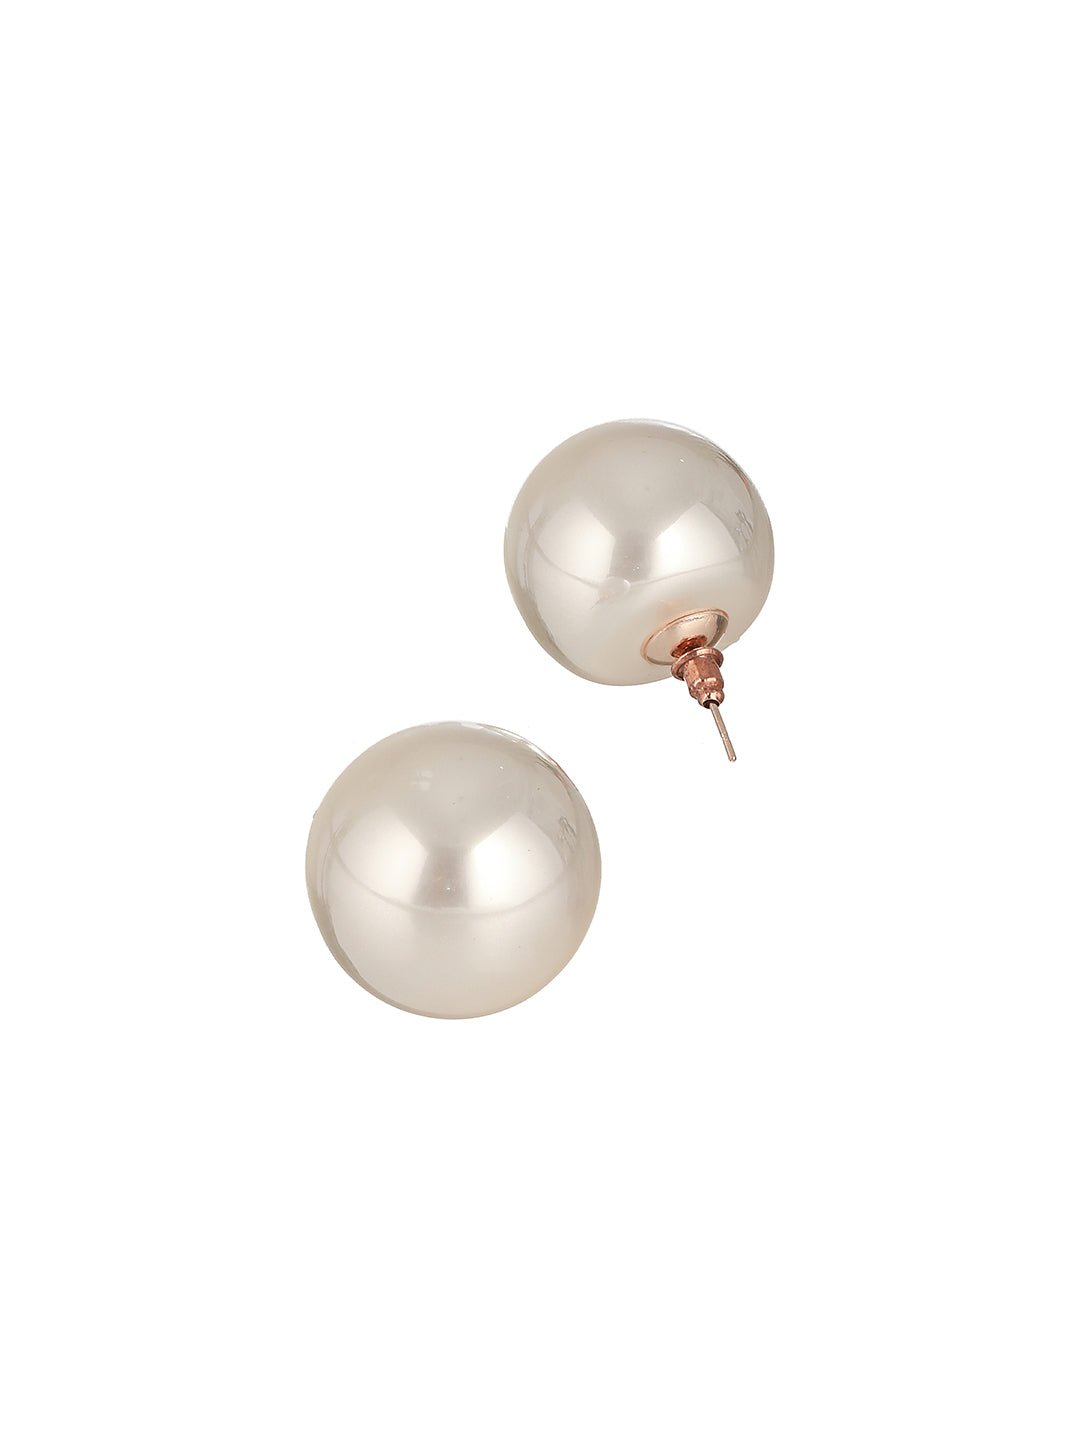 Copy of Prita by Priyaasi Shiny Sphere Pearl Oversized Silver-Plated Stud Earrings